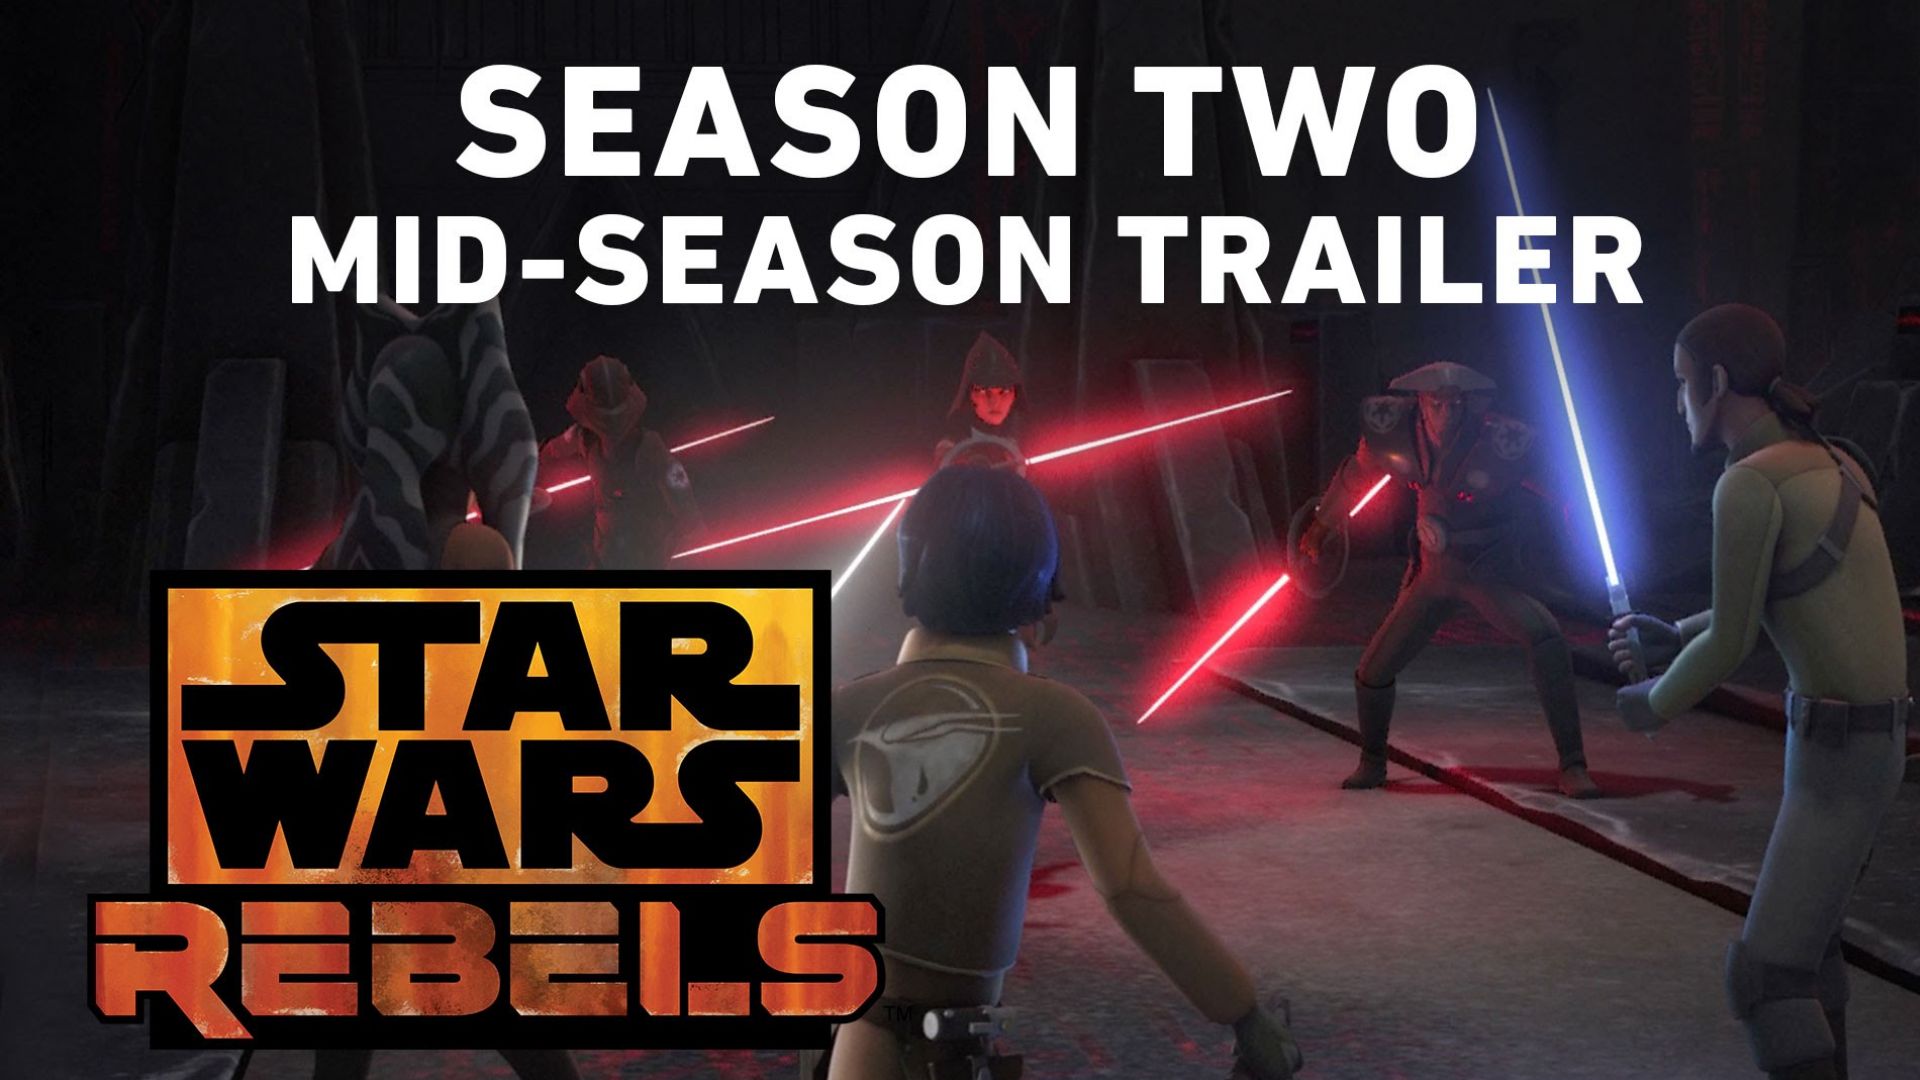 Star Wars Rebels Season Two Mid-season Trailer Ties into The